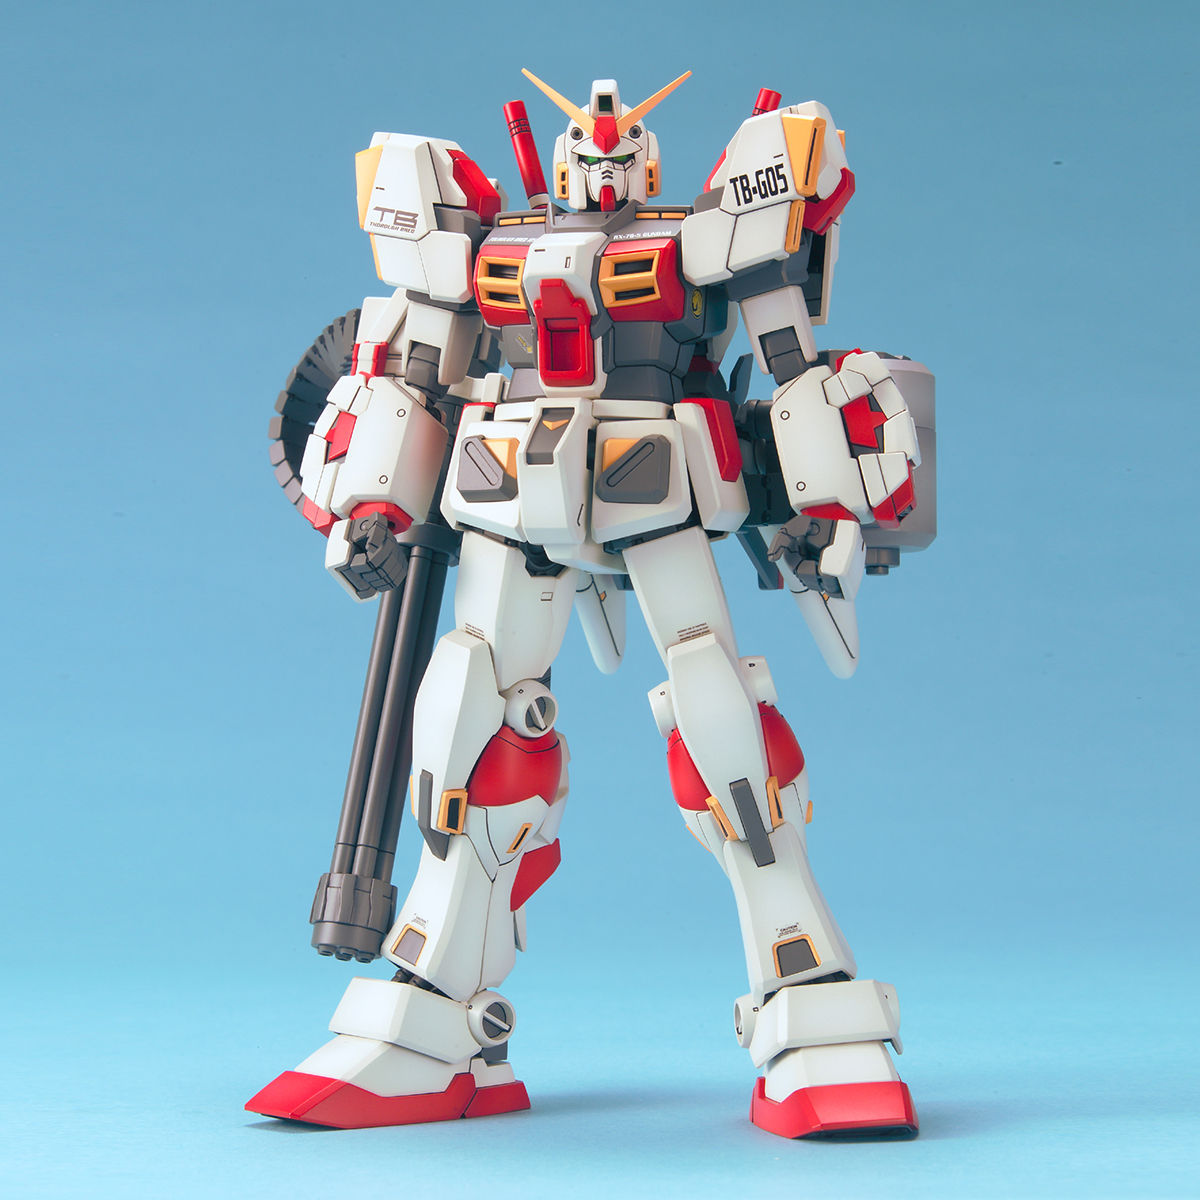 RX-78-5[Bst] ガンダム5号機[Bst] [Gundam Unit 5 “G05” [Bst]]